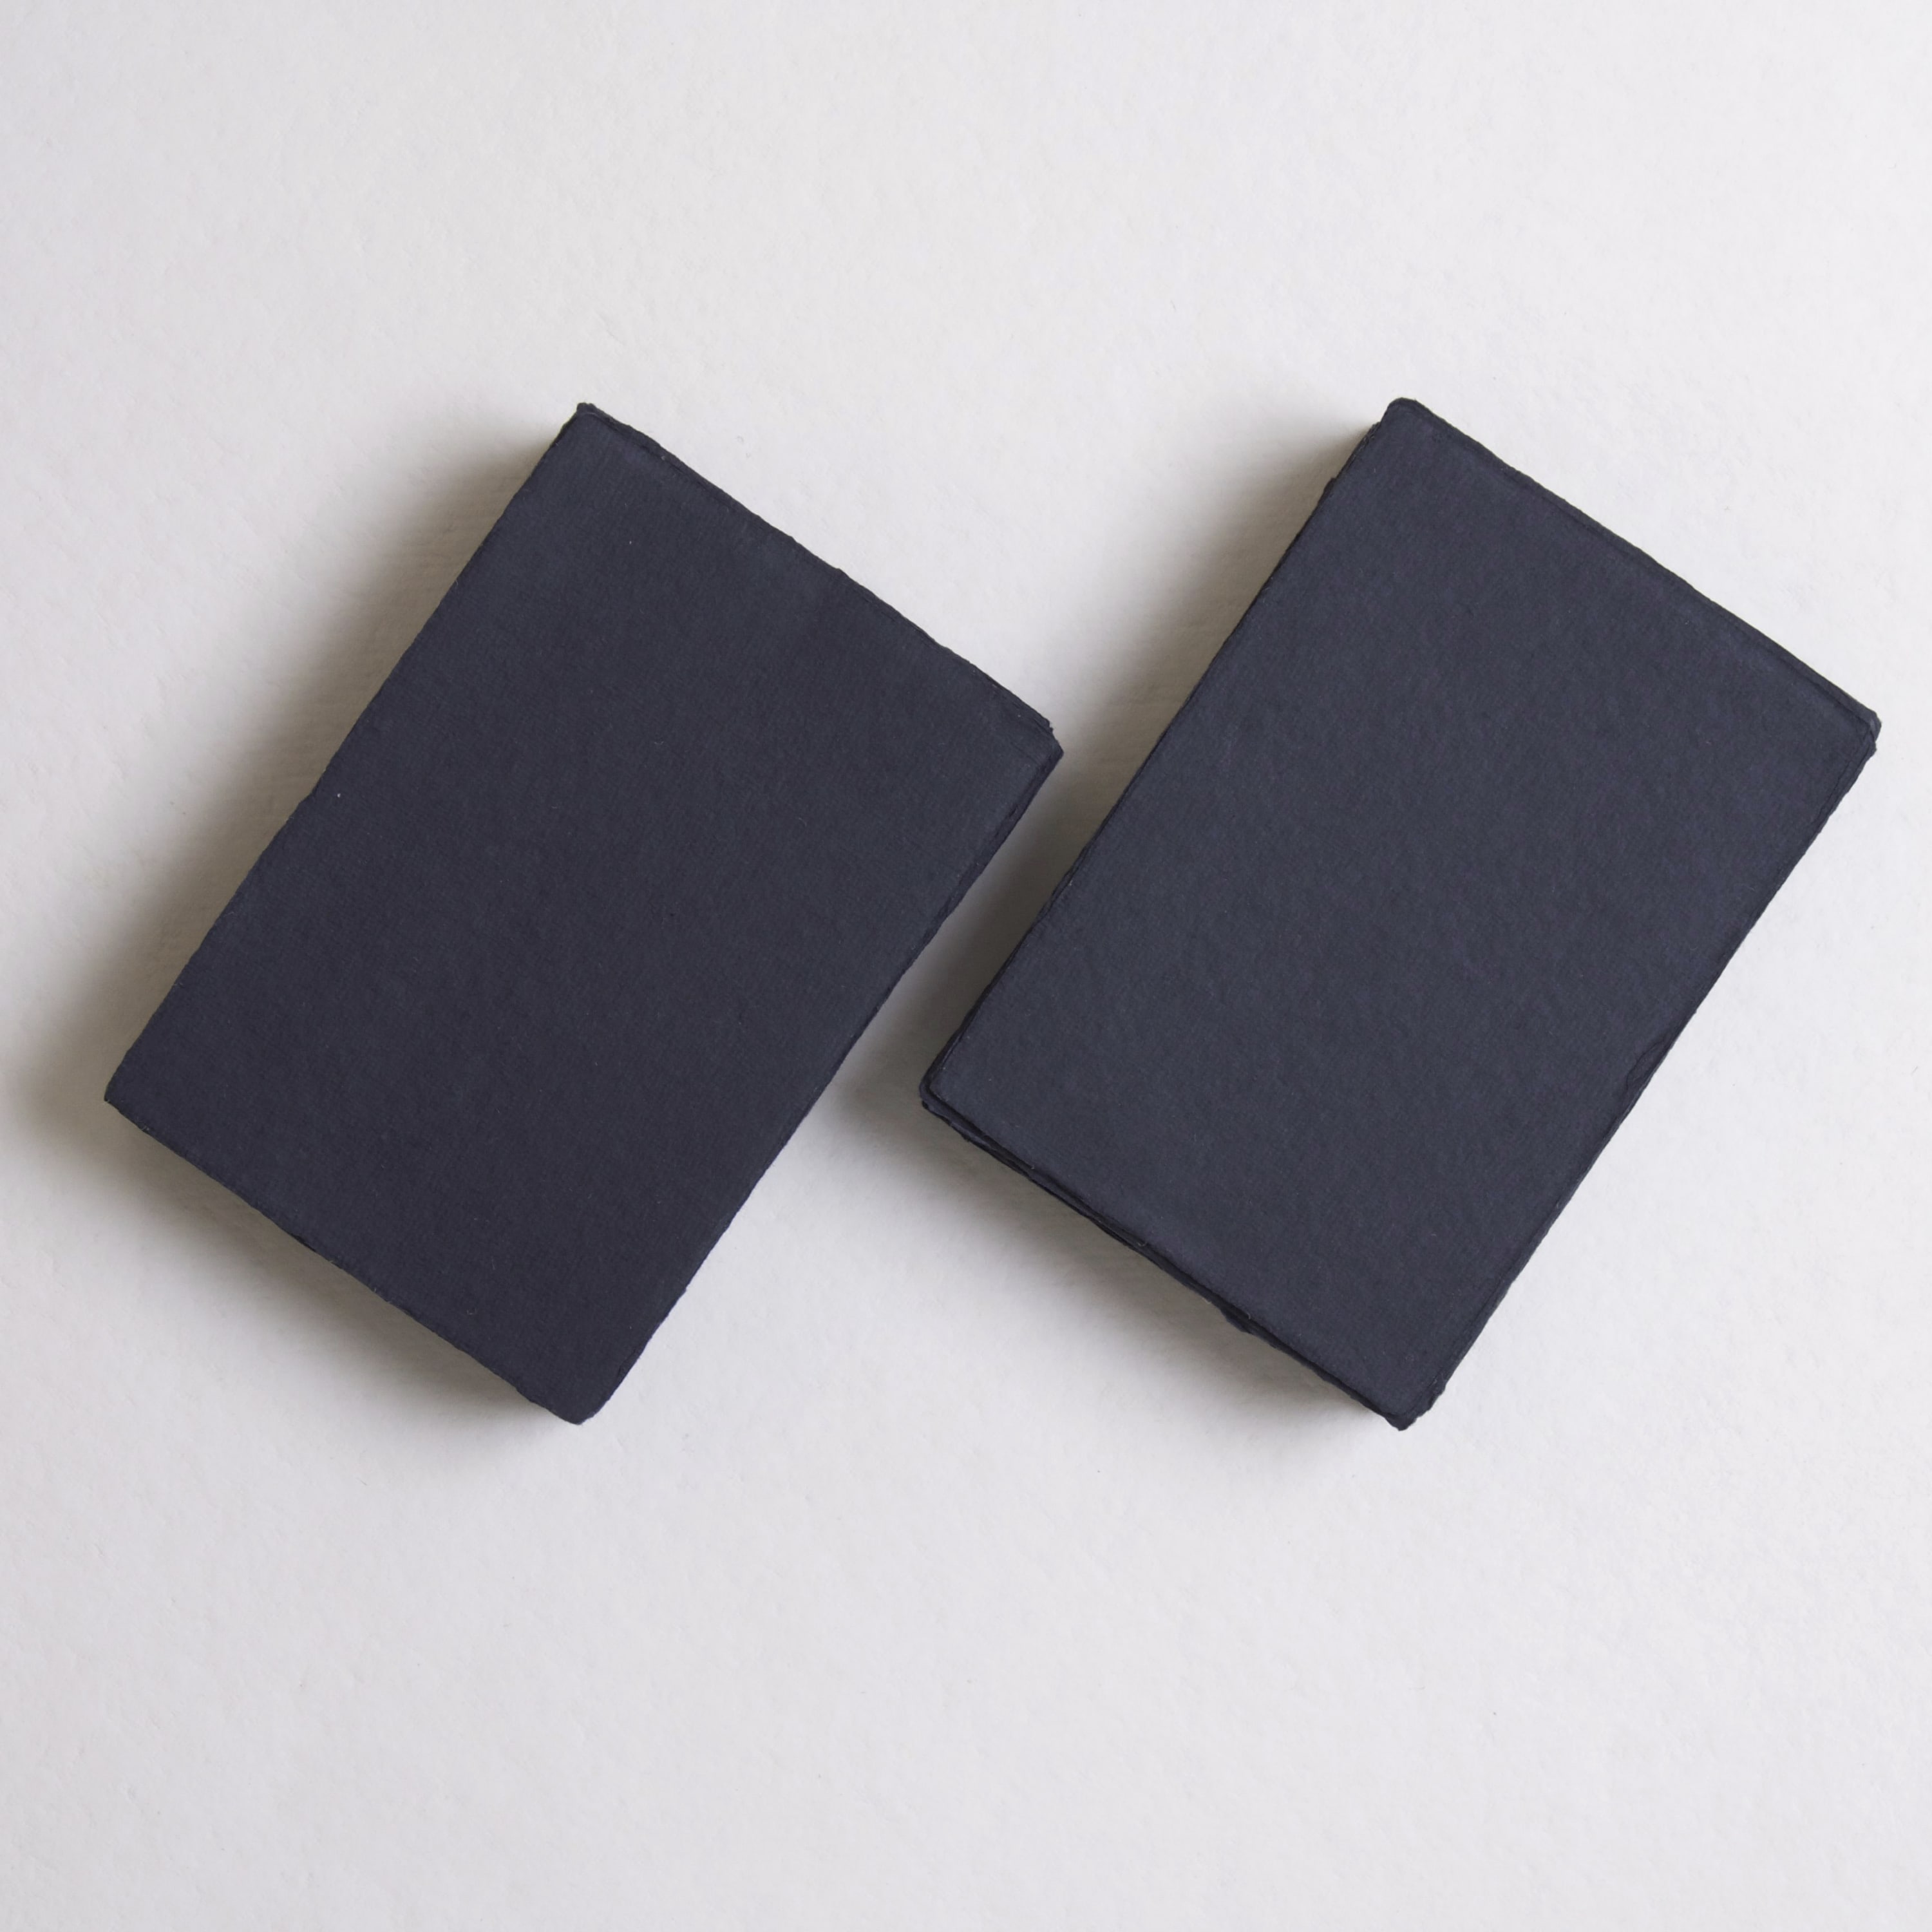 Light Grey, A6, 200 gsm – Deckle edge paper – Indian Cotton Paper Co.